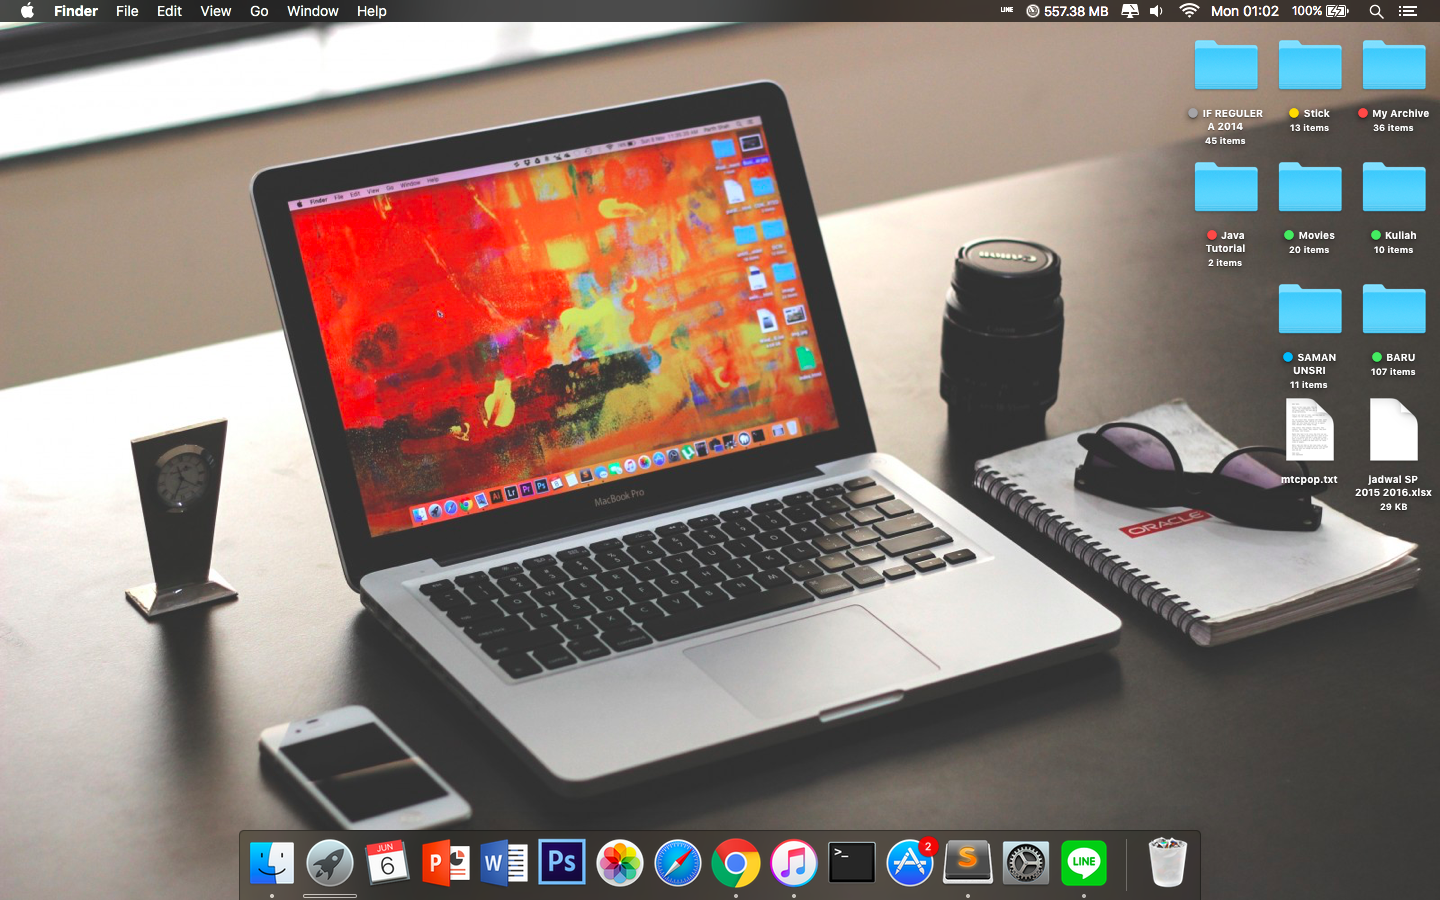 Memperindah Tampilan Dekstop Macbook - Macbook Pro 13 Inch - HD Wallpaper 